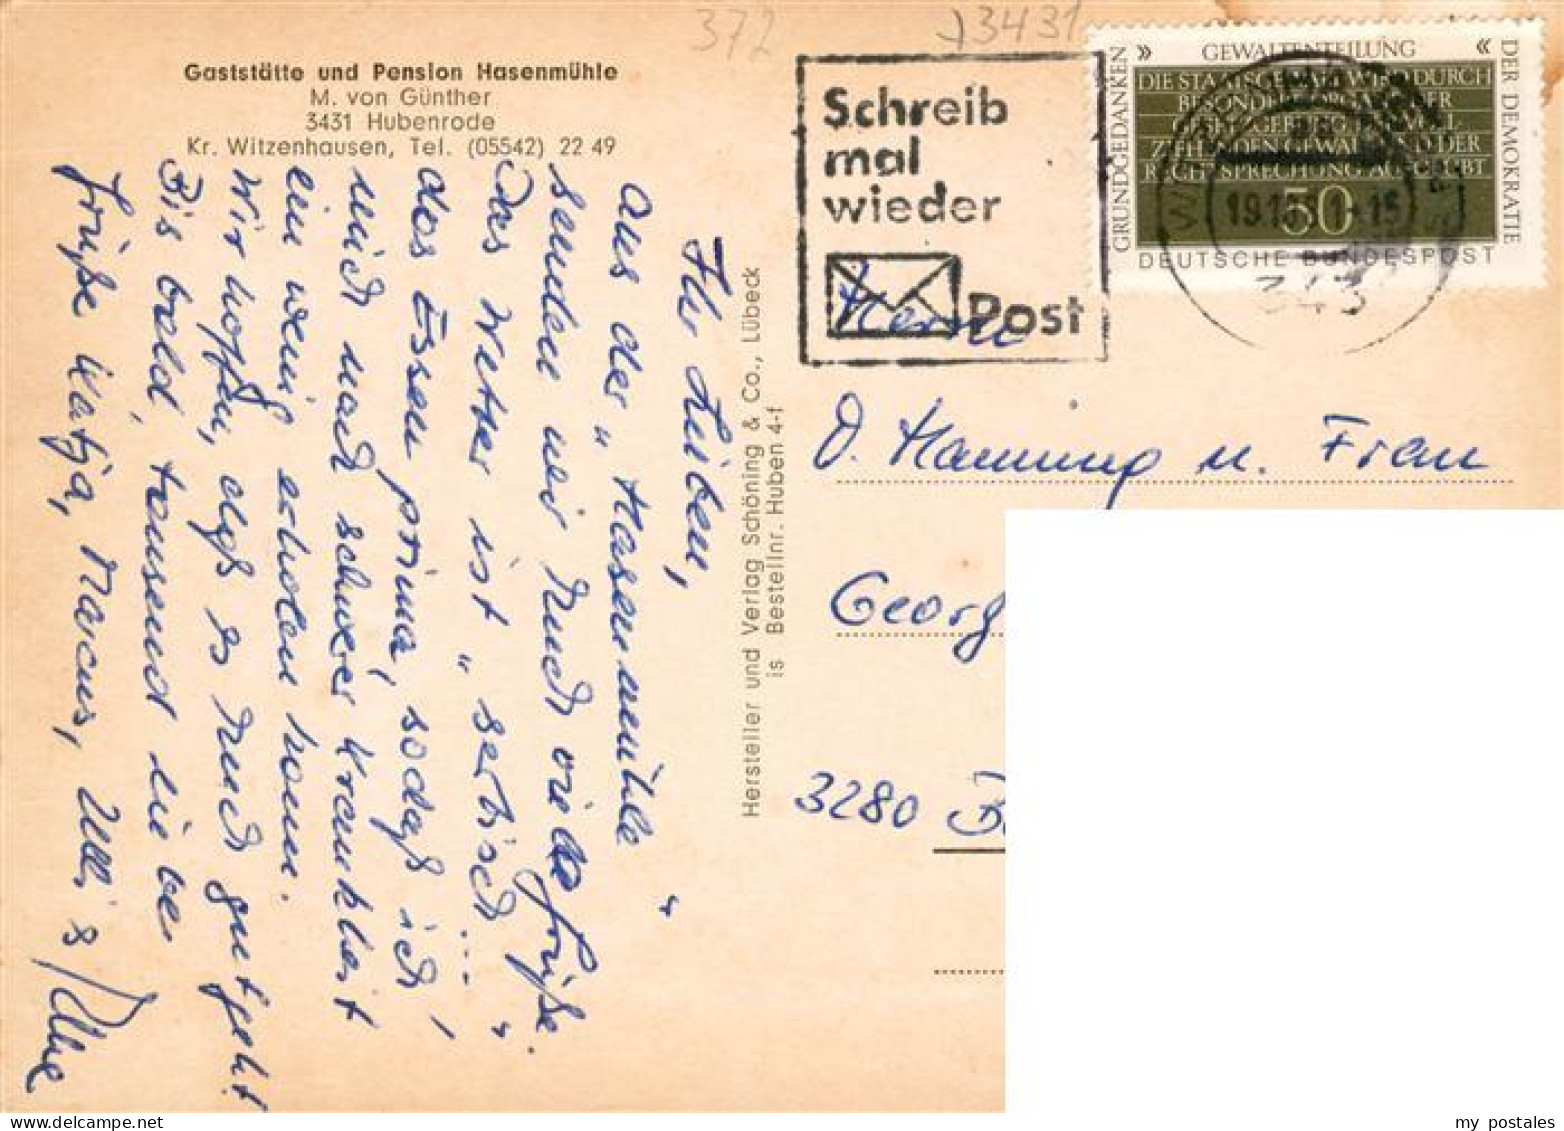 73919443 Hubenrode Gaststaette Pension Hasenmuehle - Witzenhausen